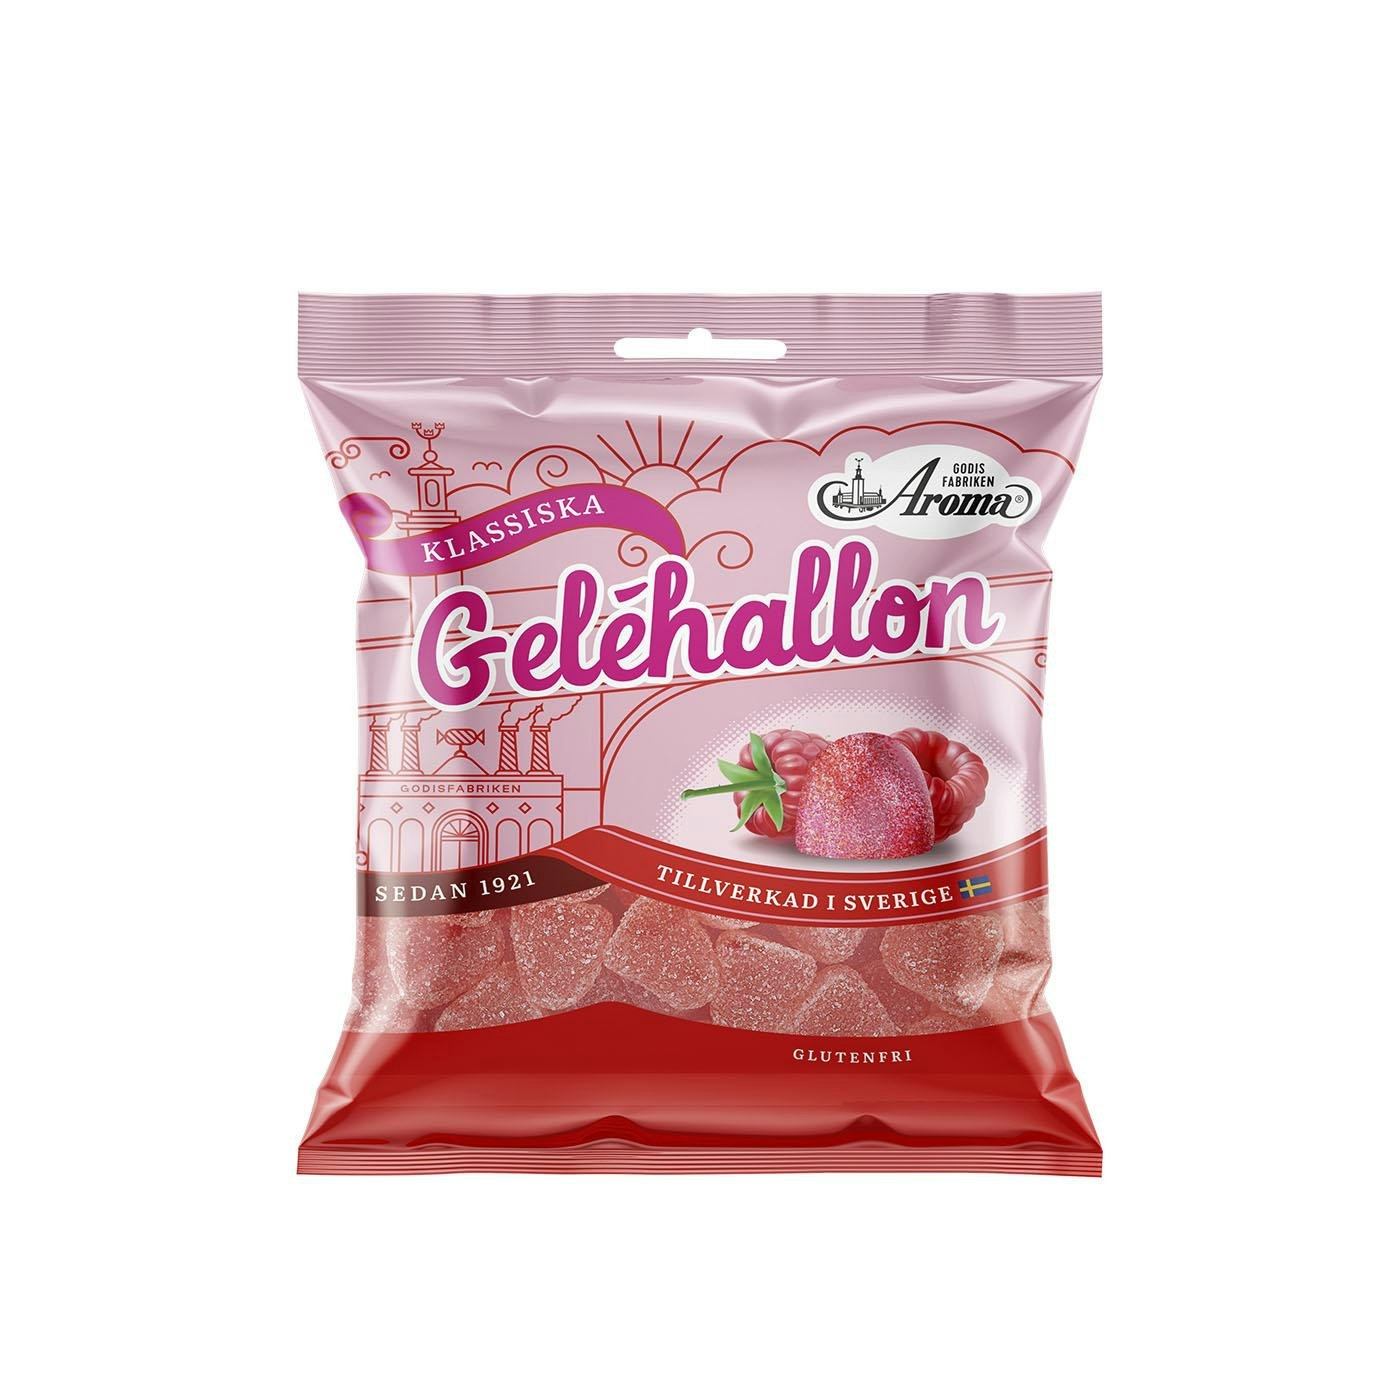 Aroma Gélehallon Gummy Raspberries - 80 grams